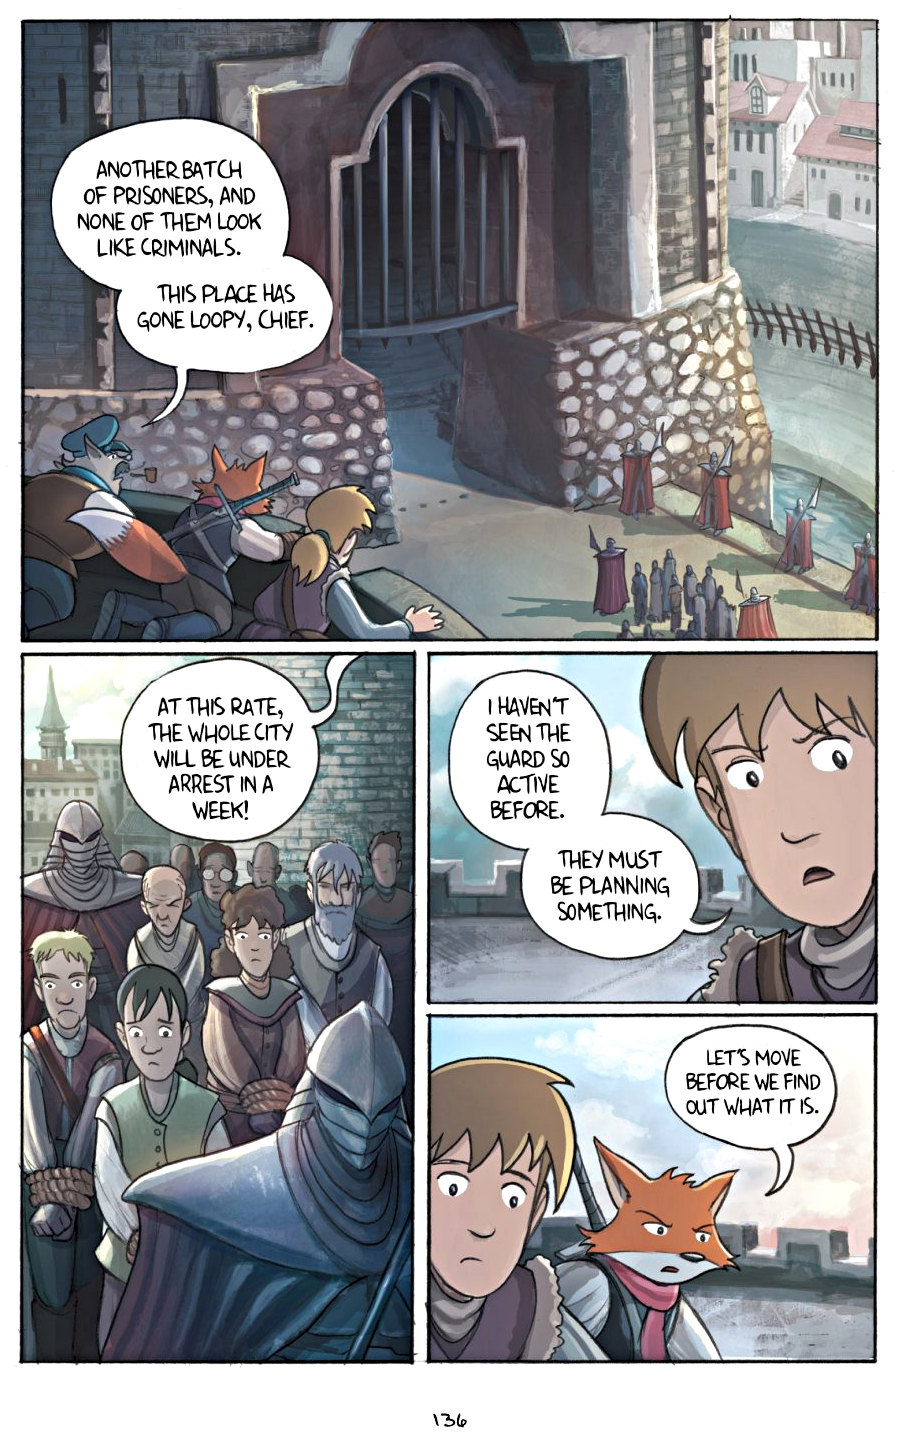 page 136 of amulet 4 last council graphic novel by kazu kibuishi